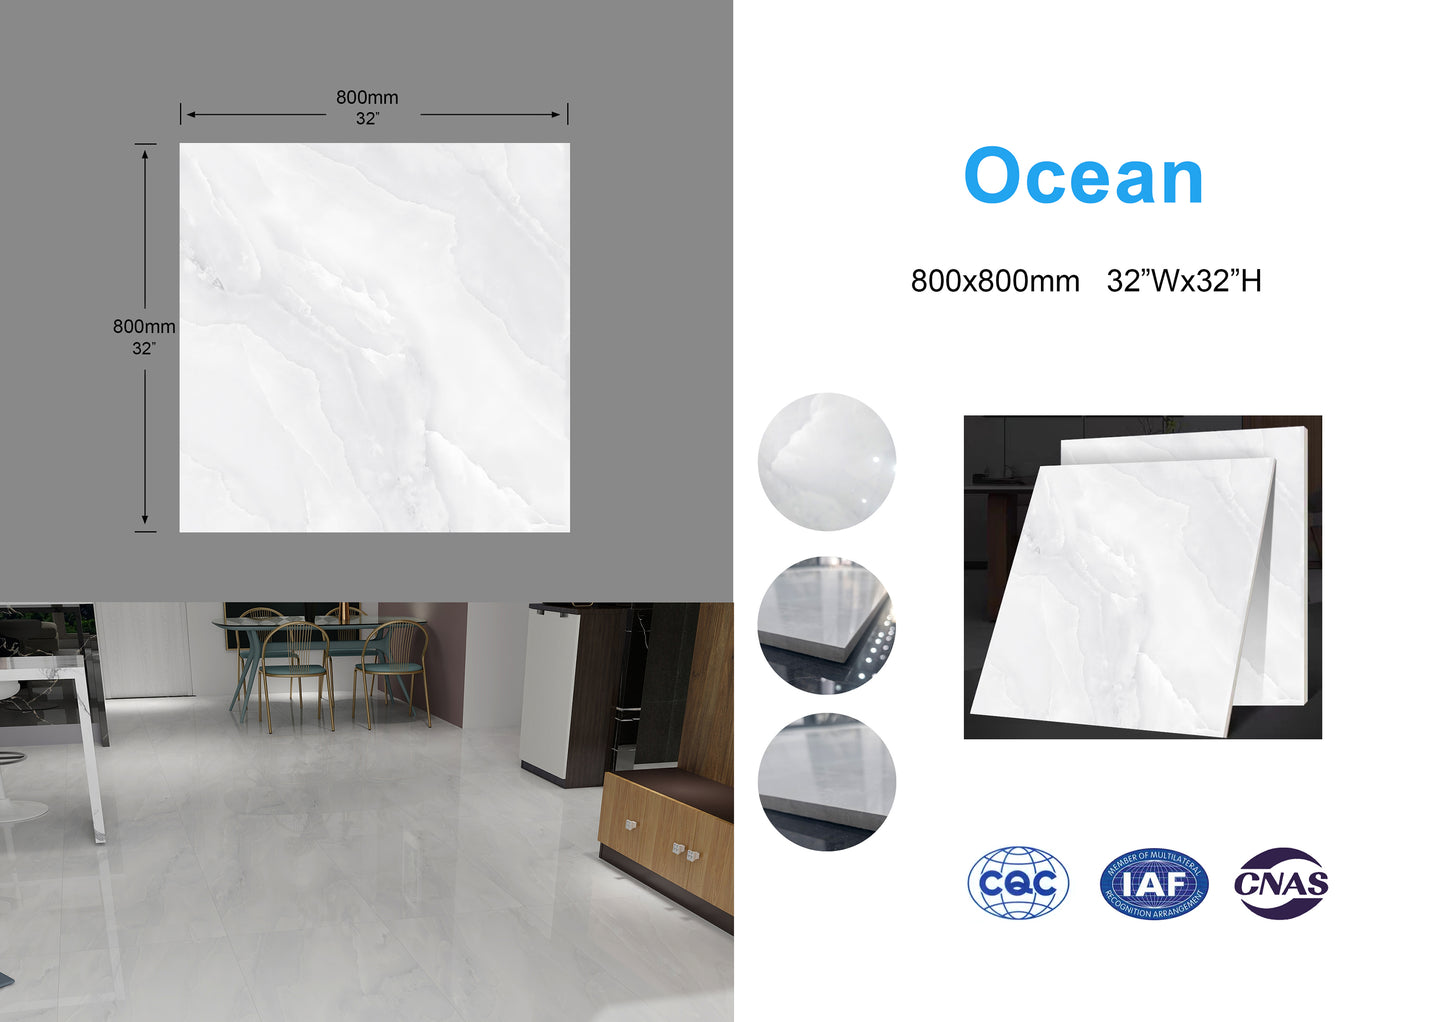 Ocean family Full Polished Glazed Tile light gray 32"x32" 3pcs/box 21.33sf/box $1.79/sf